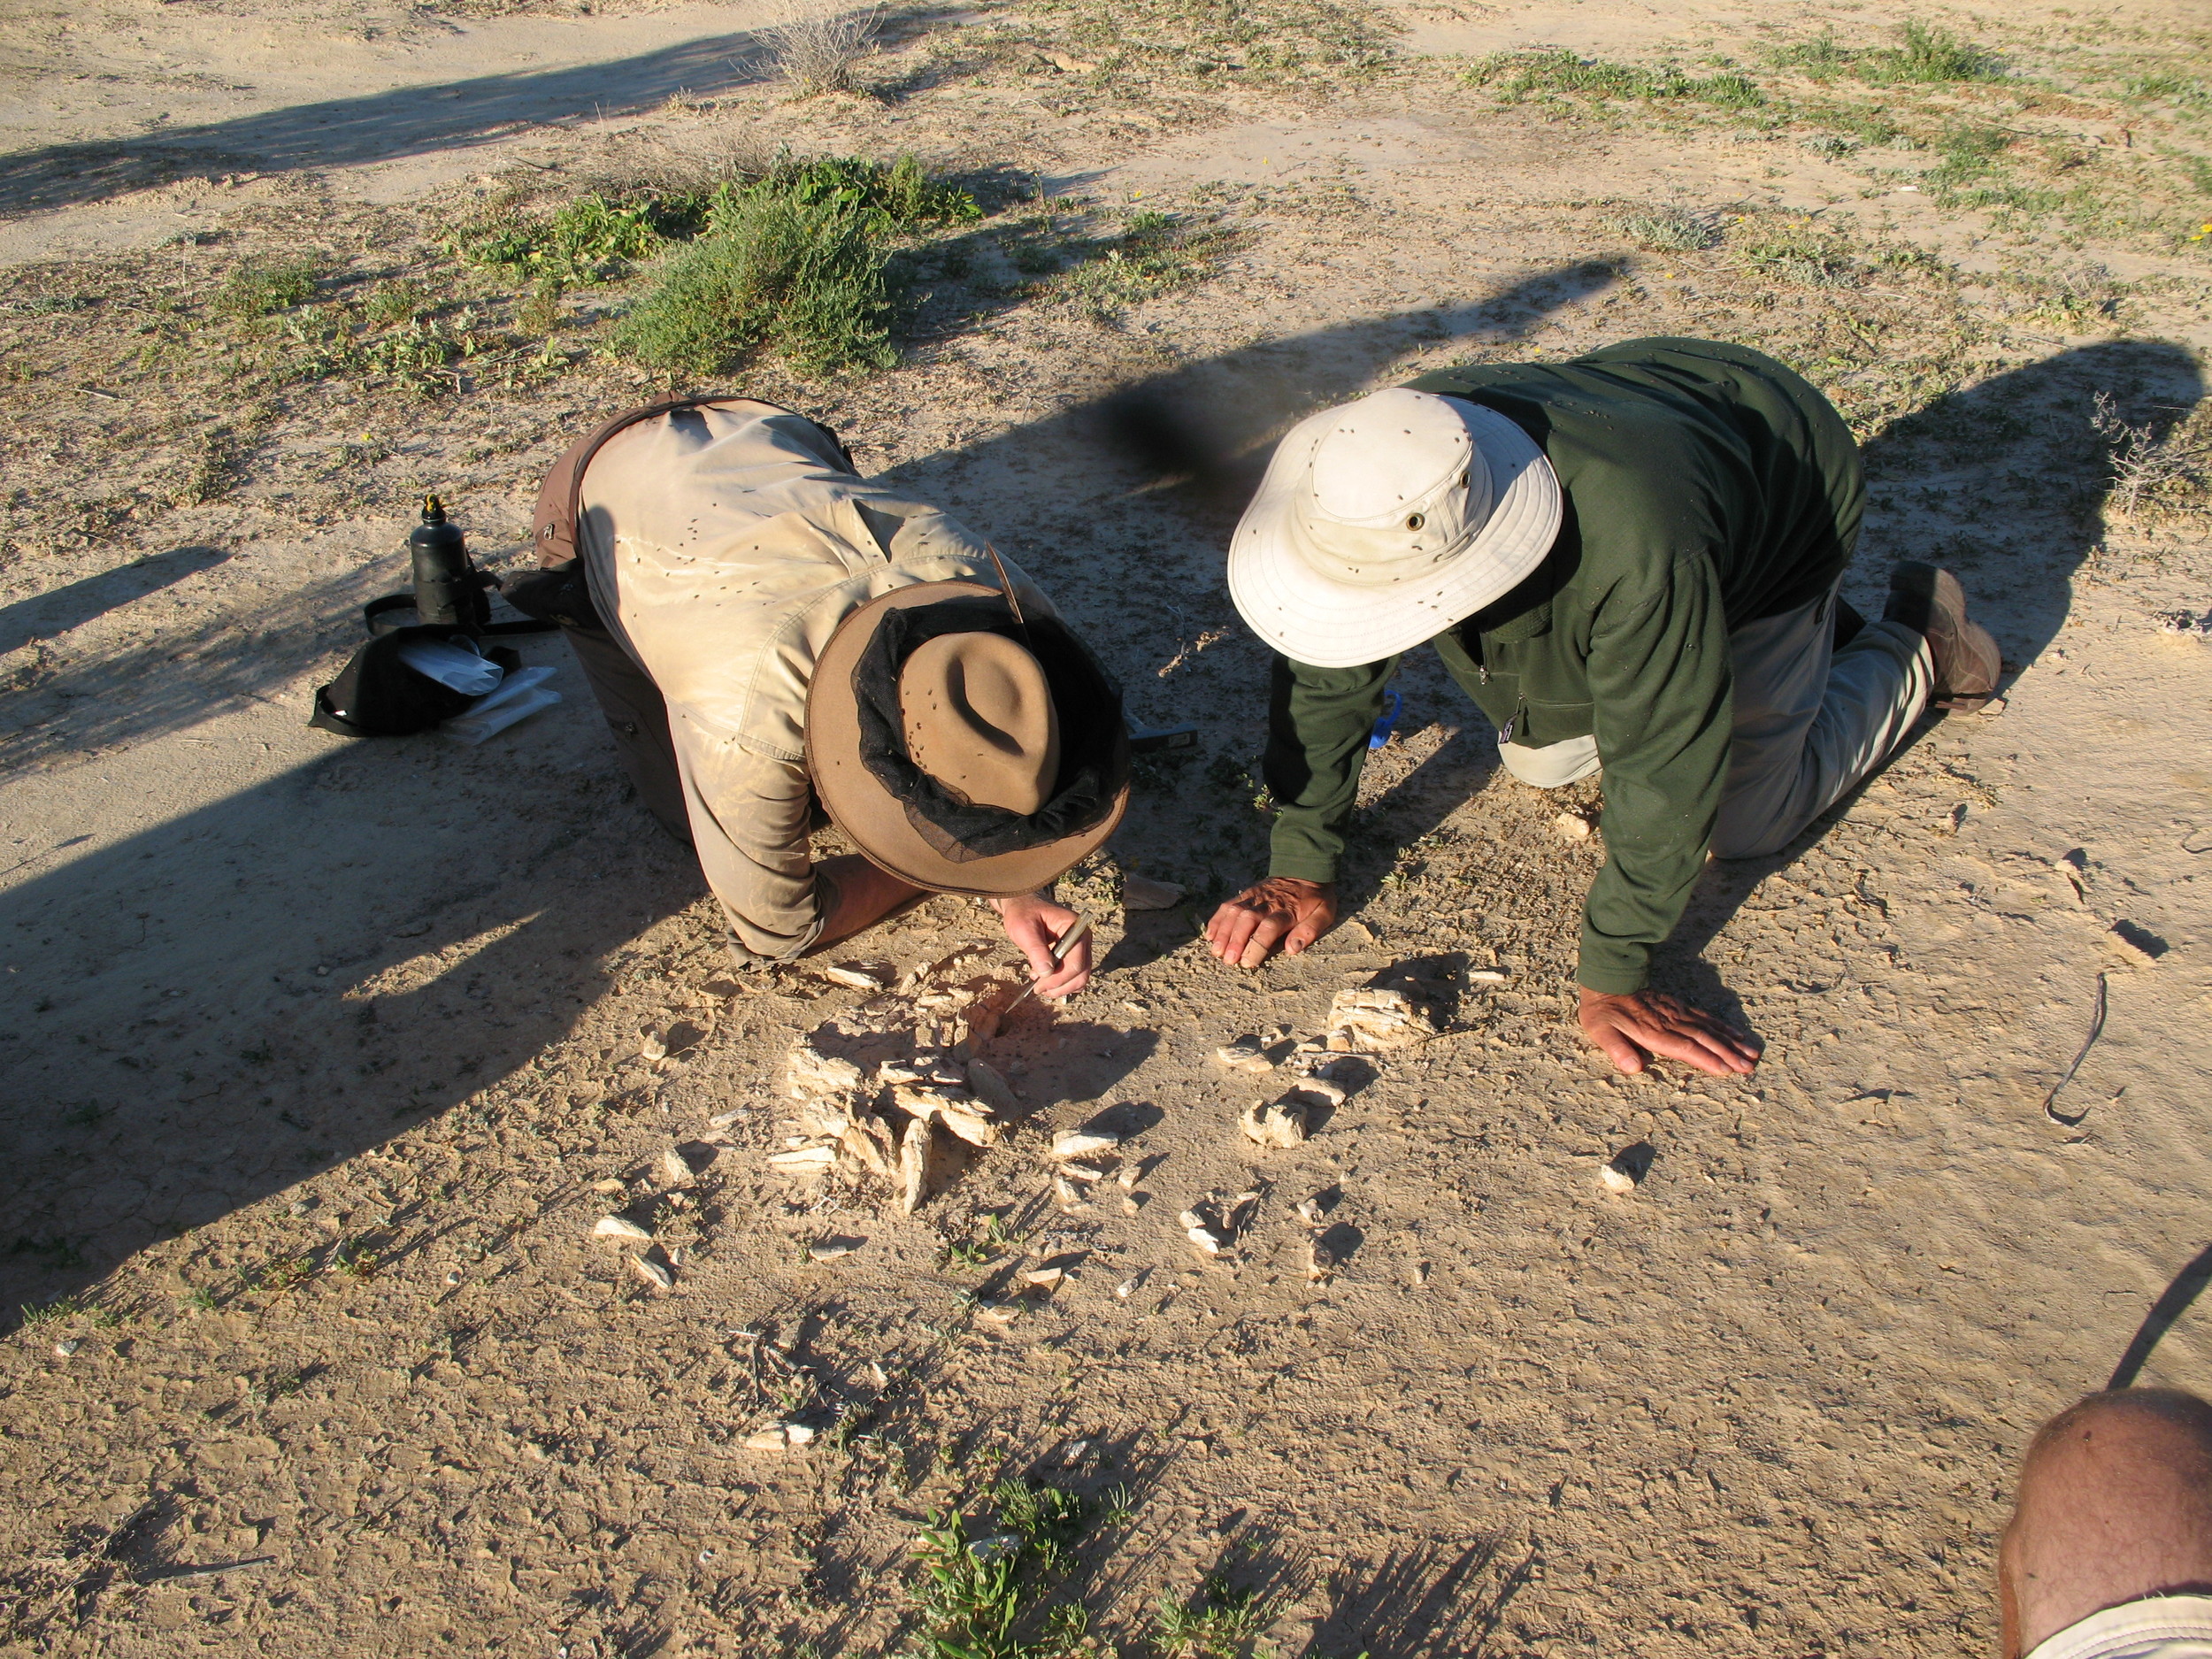 Inspecting a megafauna fossil.